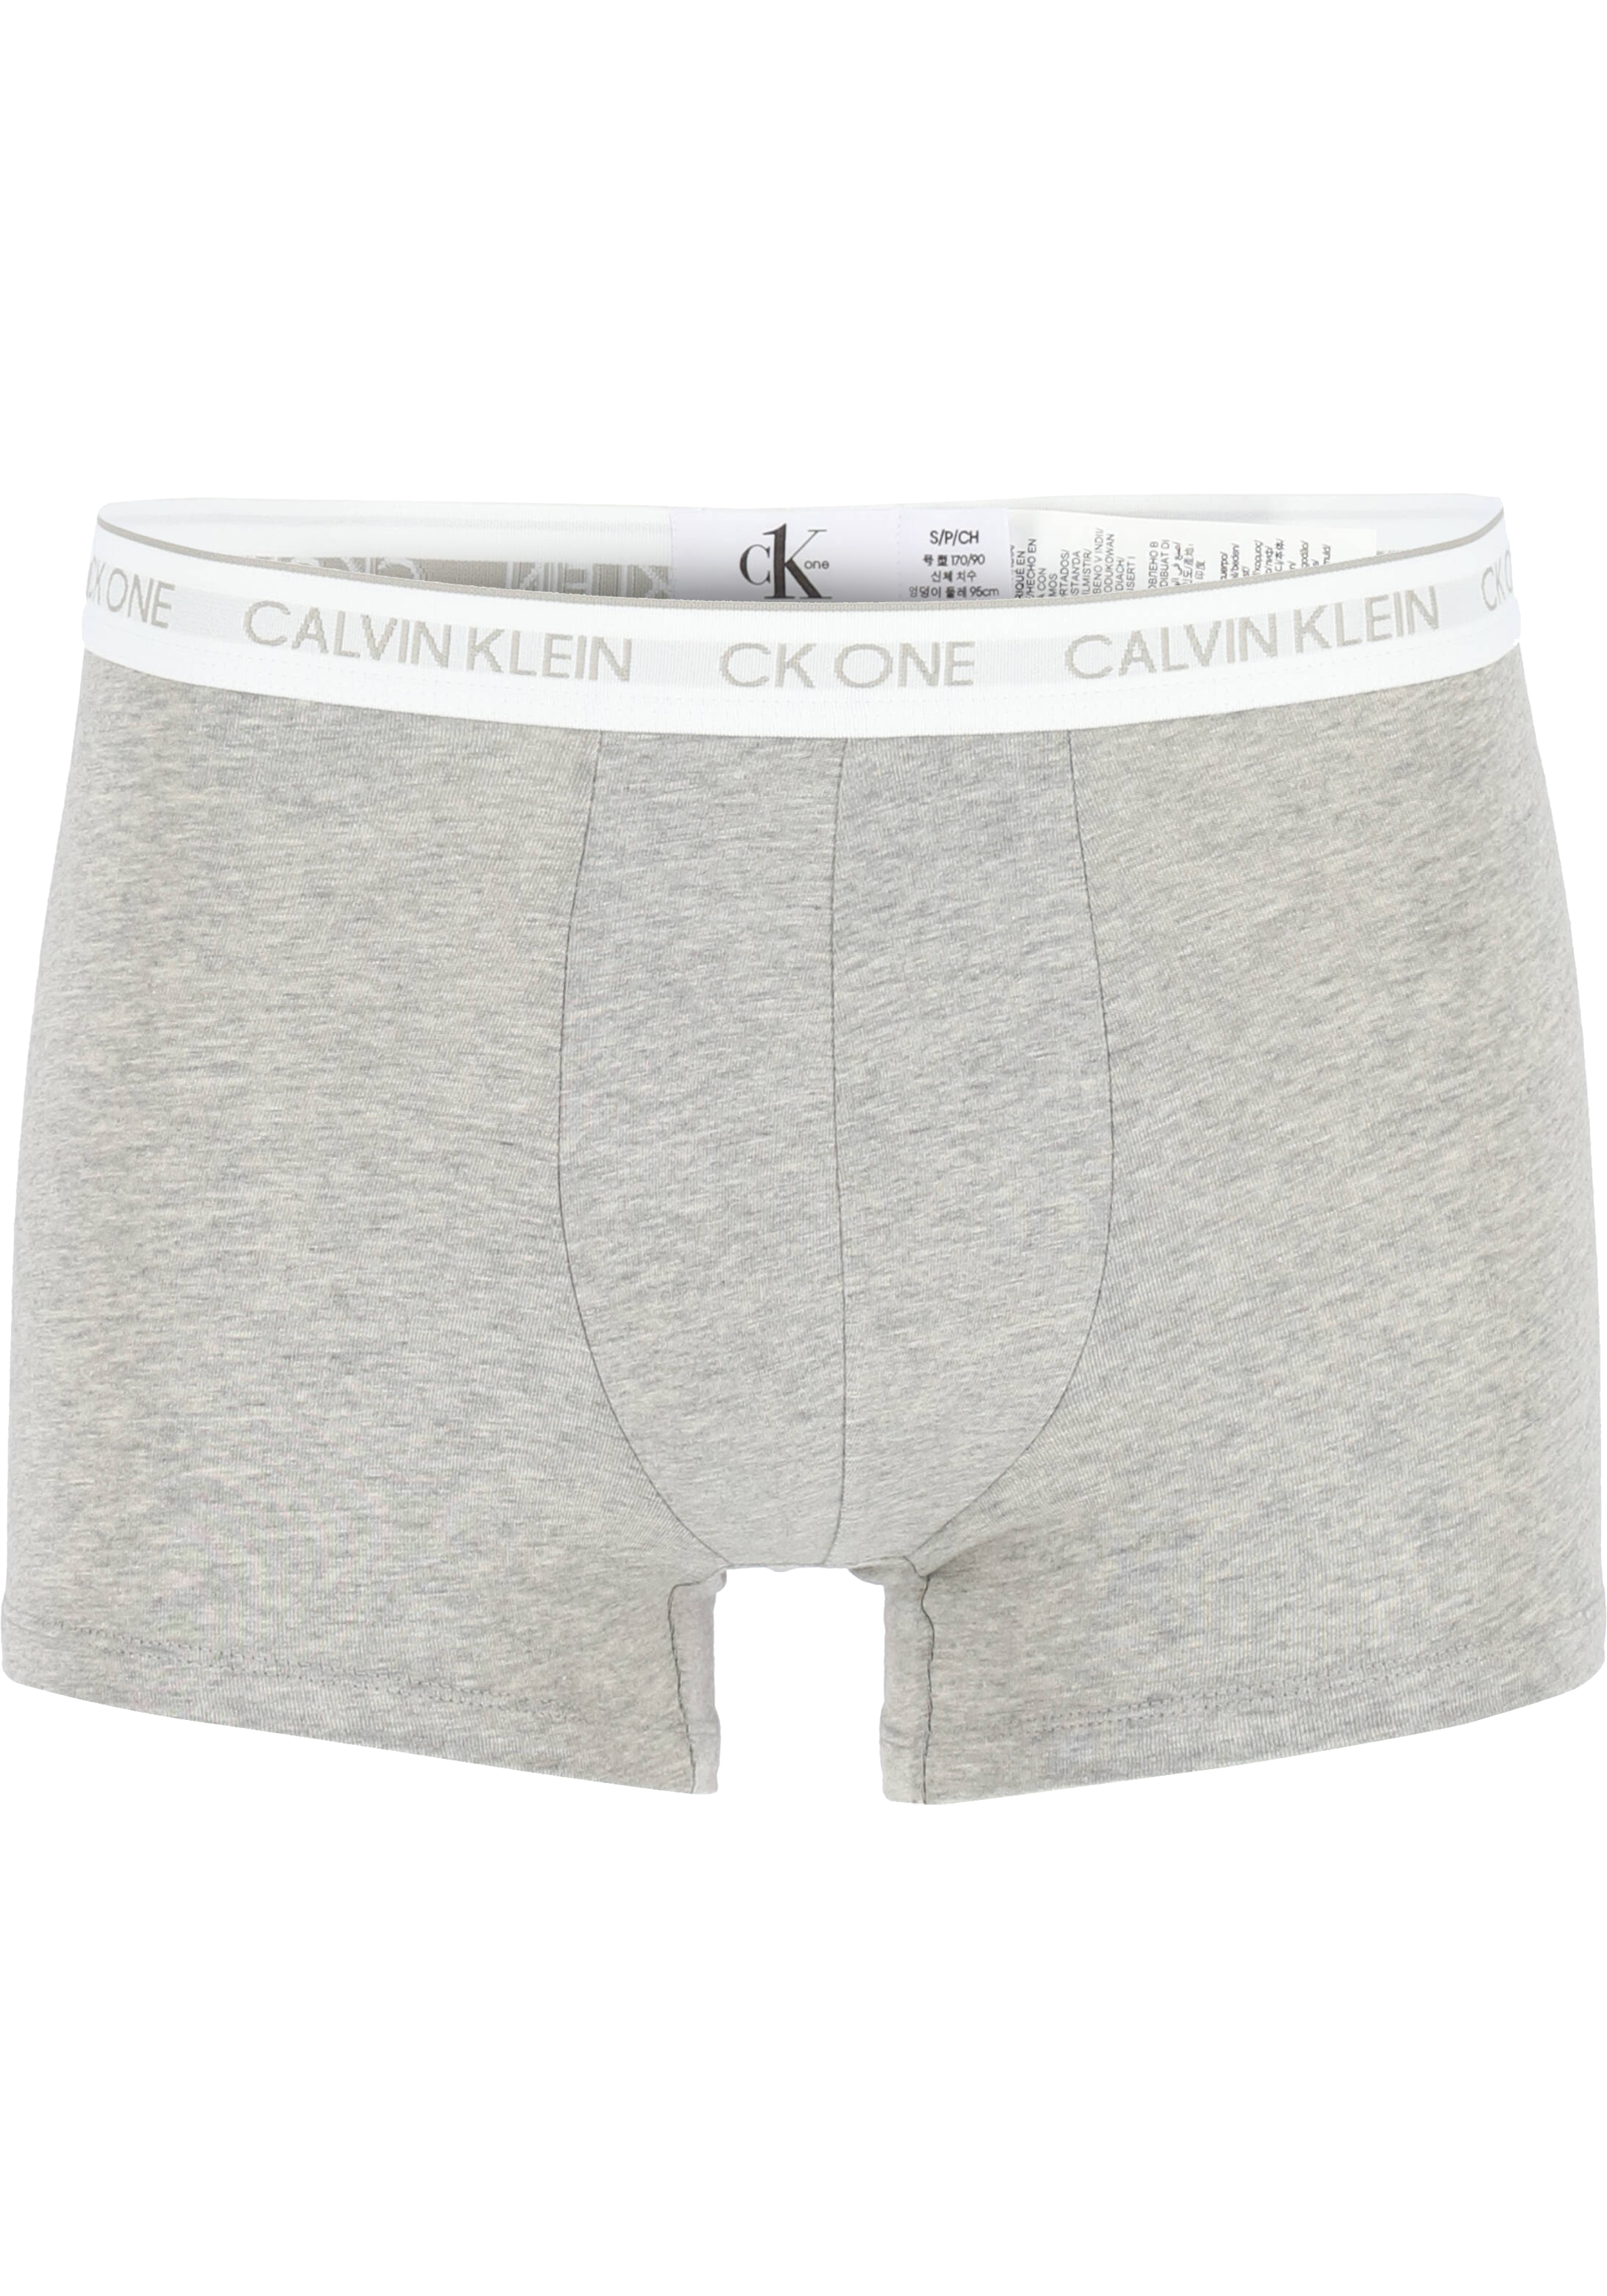 Calvin Klein CK ONE Cotton trunk (1-pack), heren boxer normale lengte, grijs melange